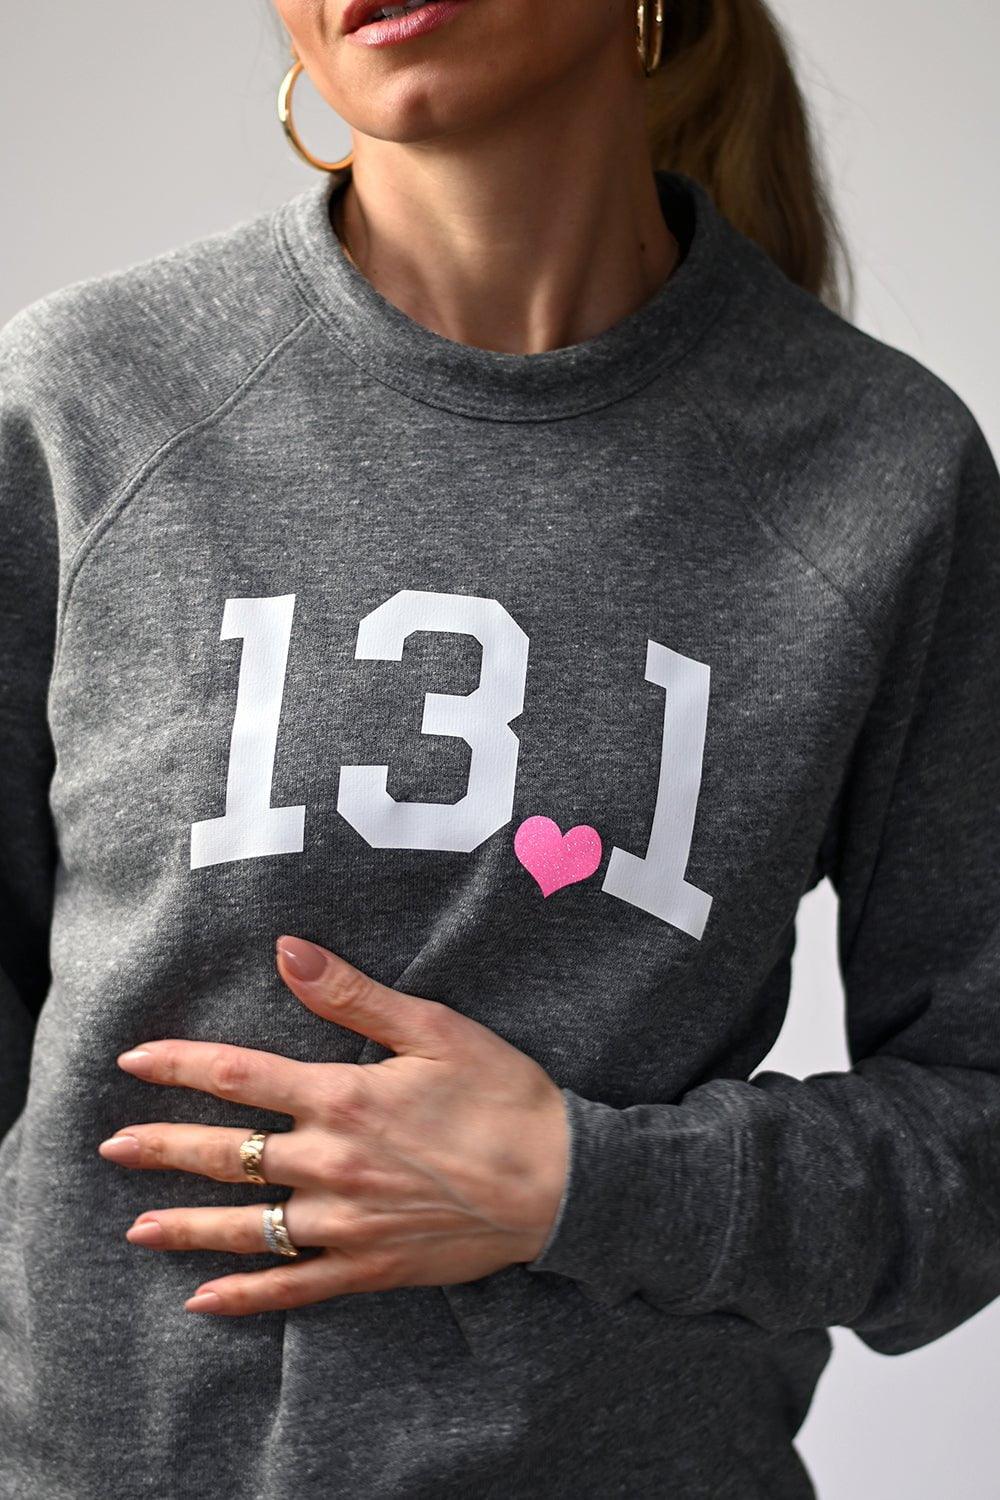 13.1 Love Half Marathon Sweatshirt